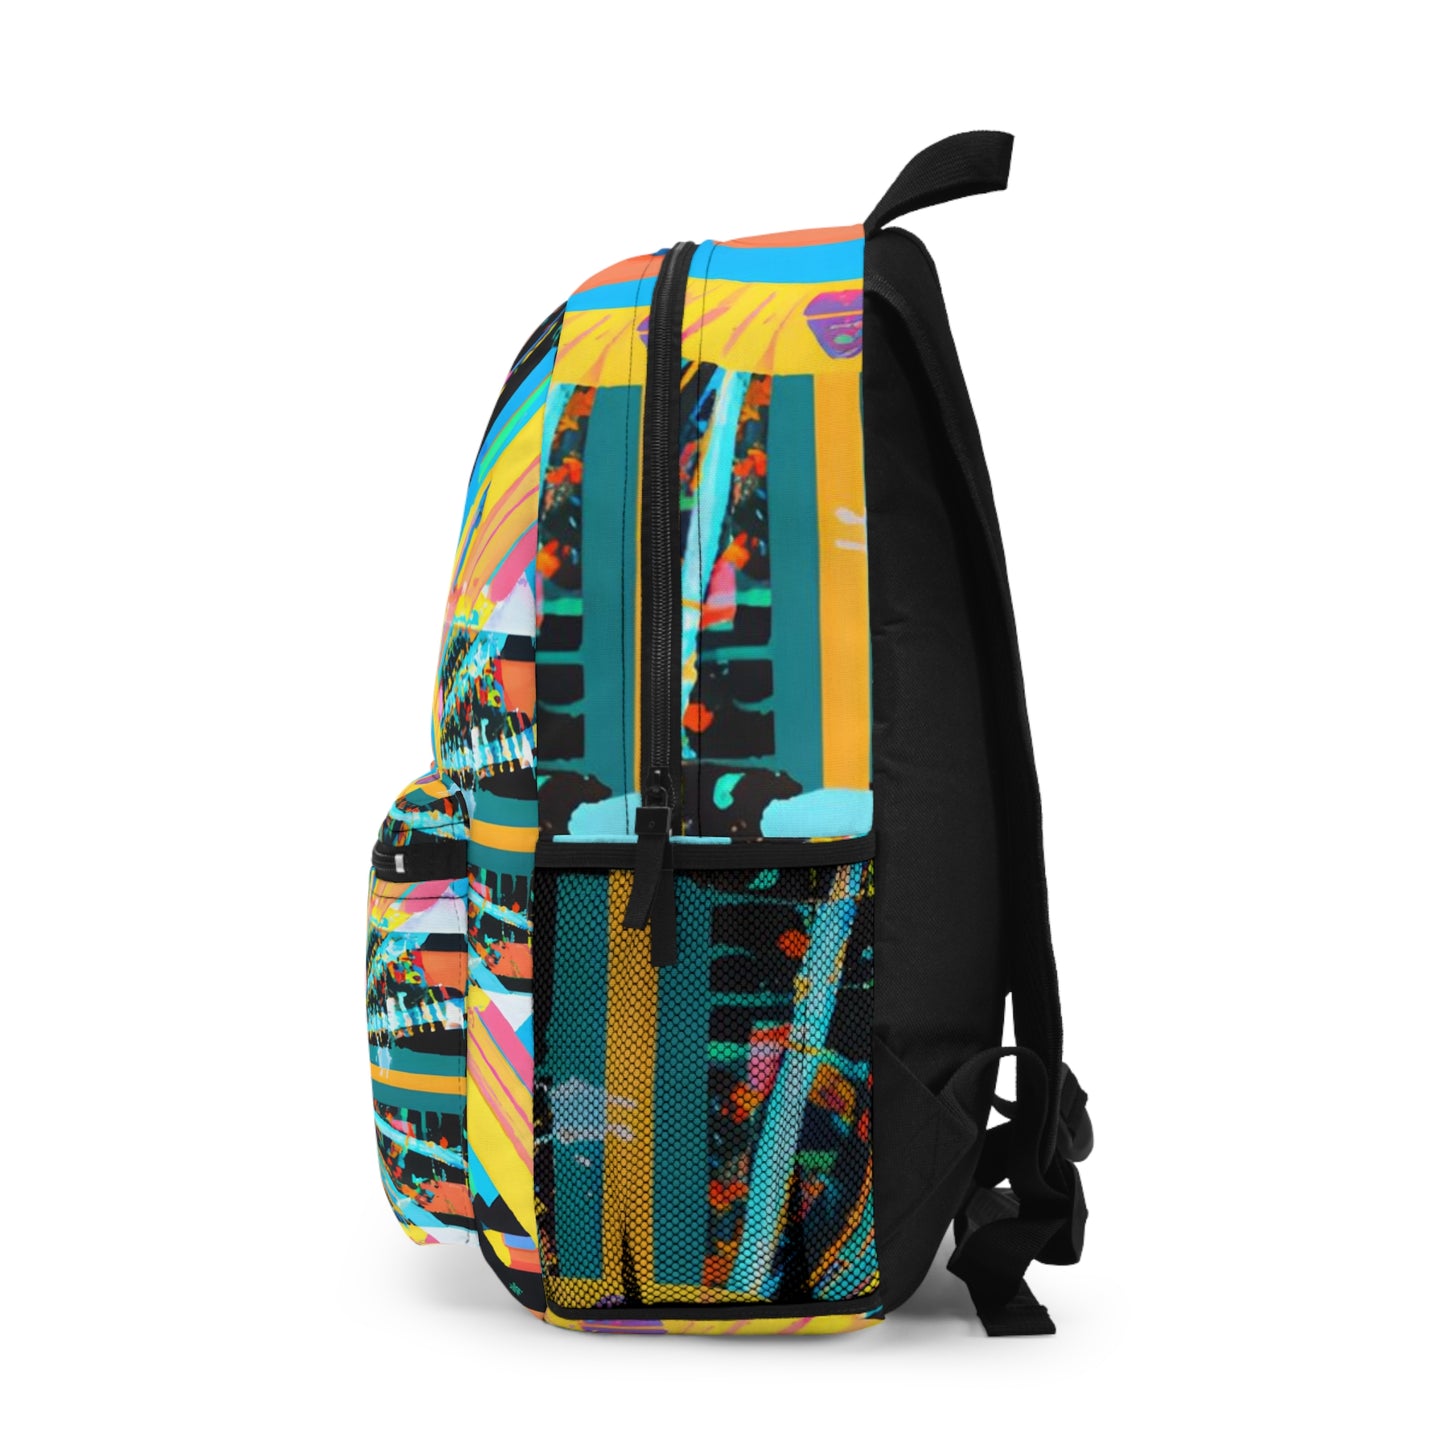 Spectrixx - Hustler Backpack